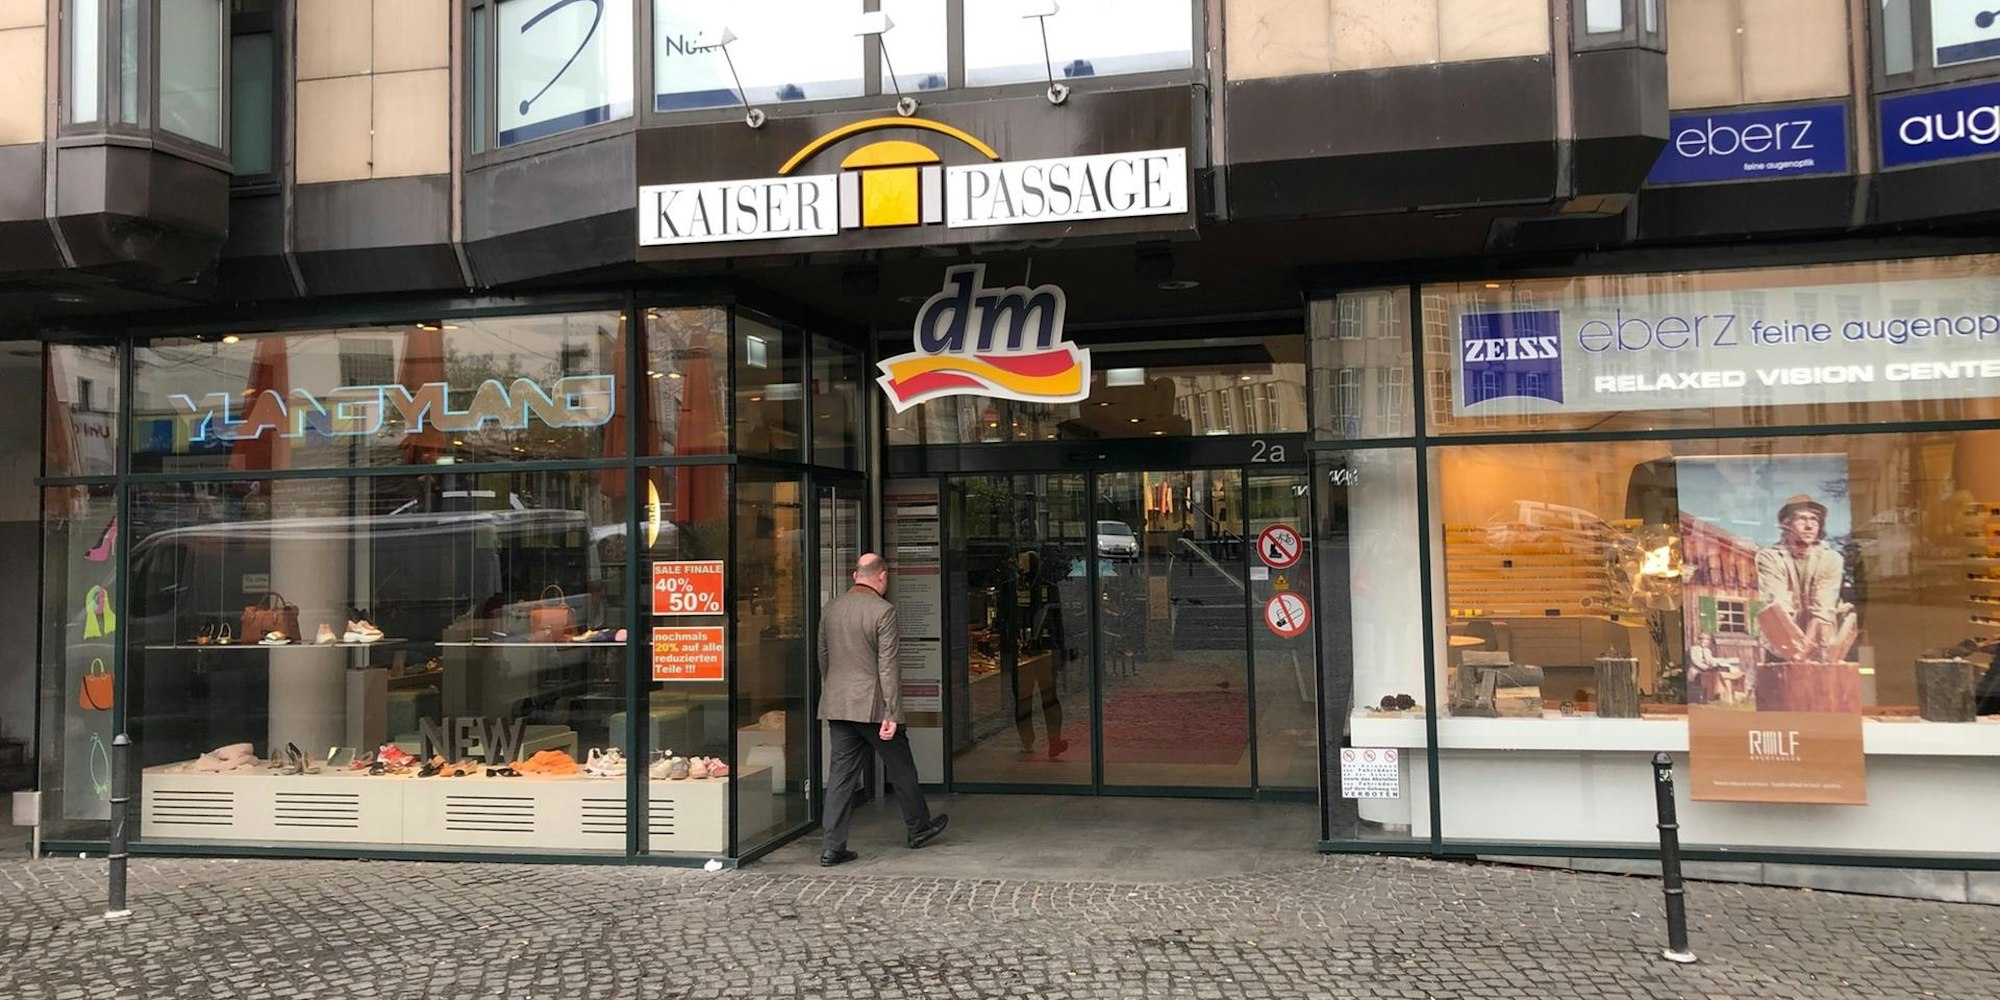 Bonn_Kaiserpassage1